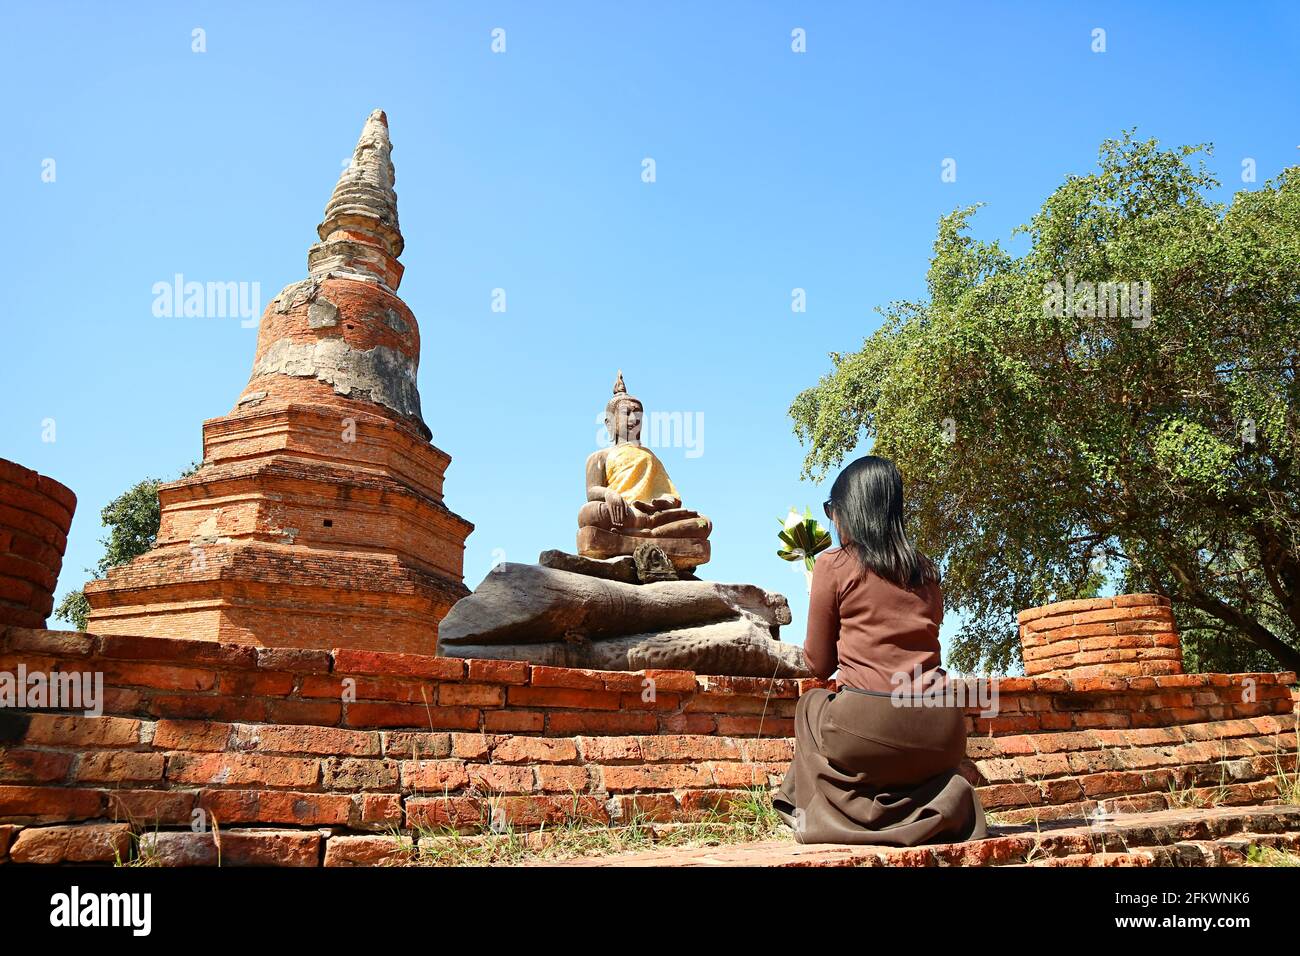 Woman praying in front of Buddha image at Wat Phra Ngam temple ruins in Ayutthaya, Thailand Stock Photo